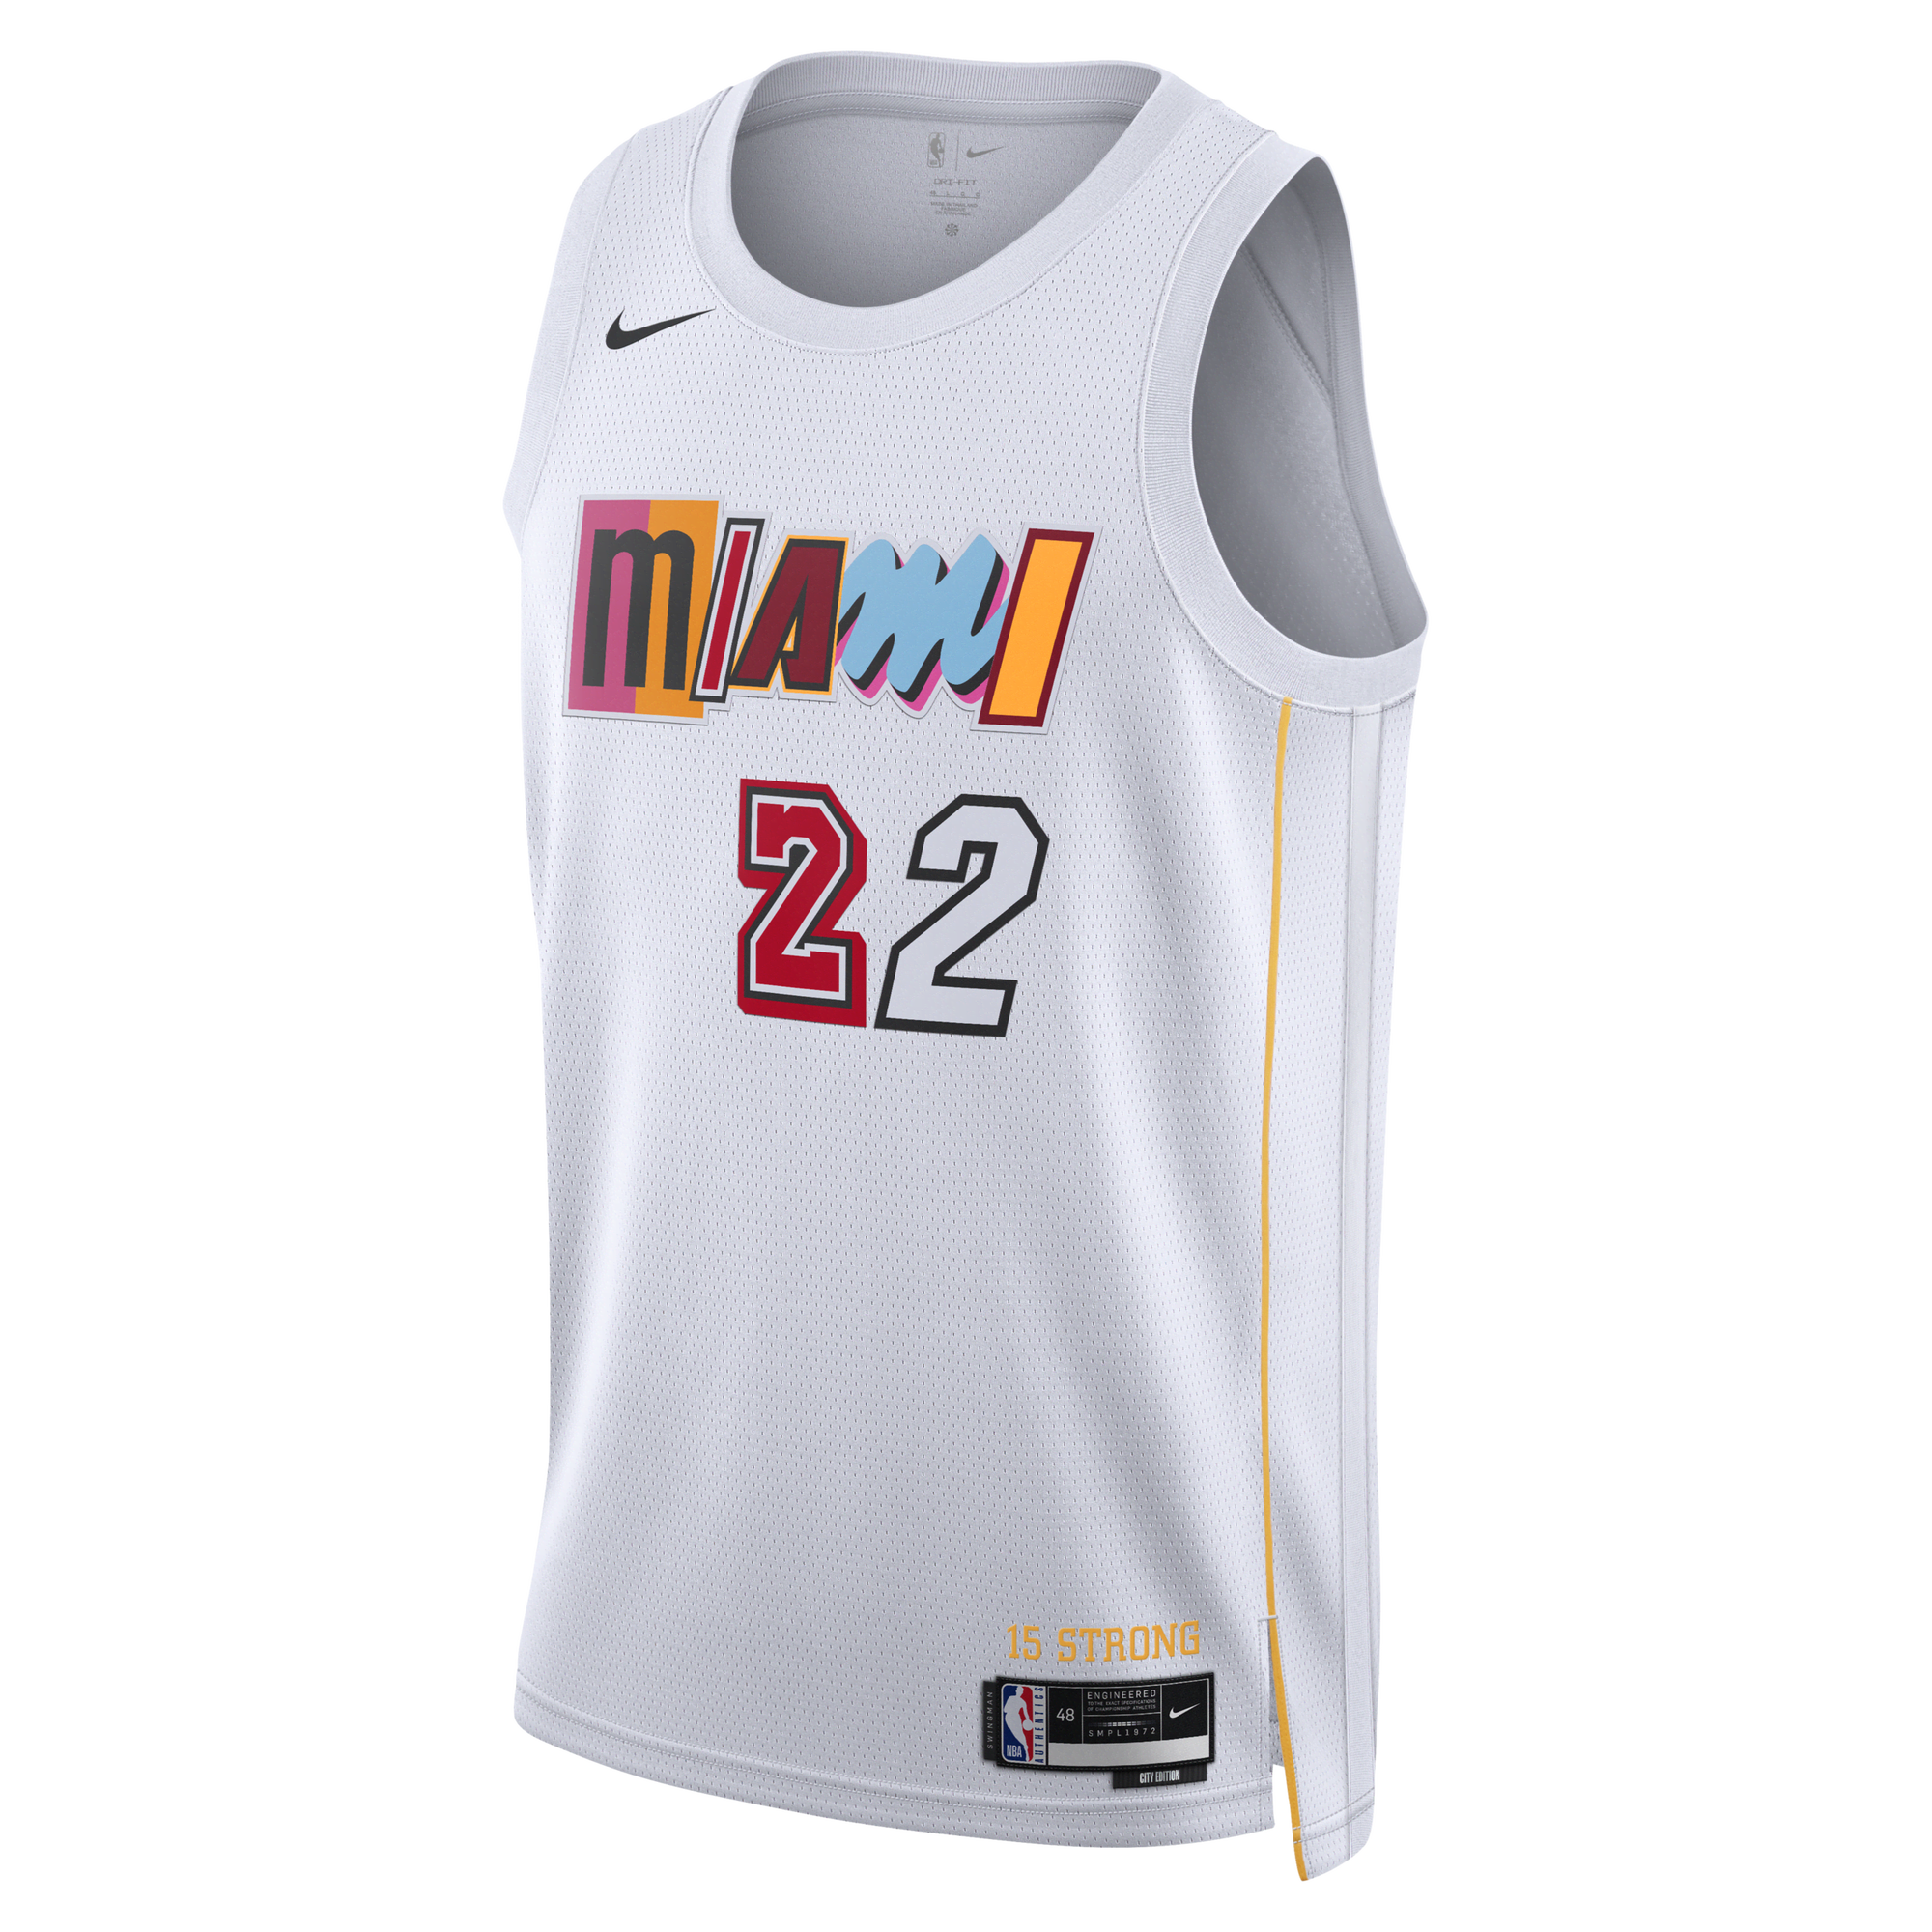 Nike Miami Heat Jerseys in Miami Heat Team Shop 